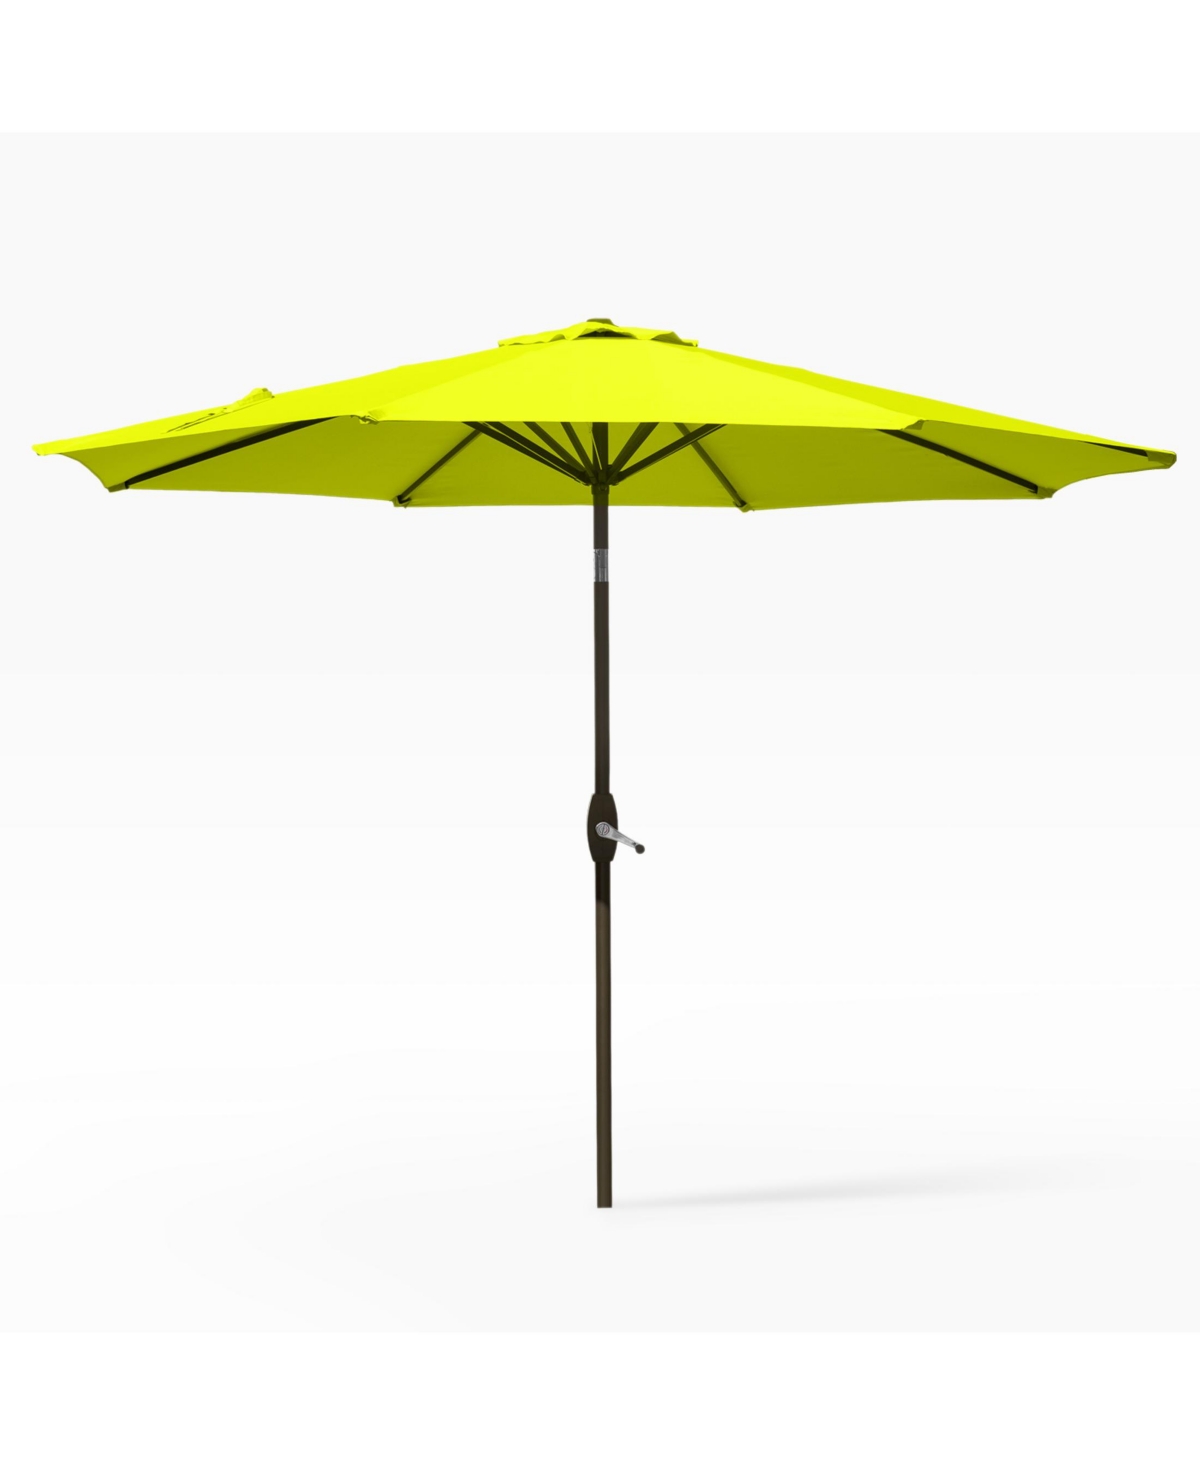 9 Ft Outdoor Patio Market Umbrella with Tilt and Crank - Gray/white Stripe